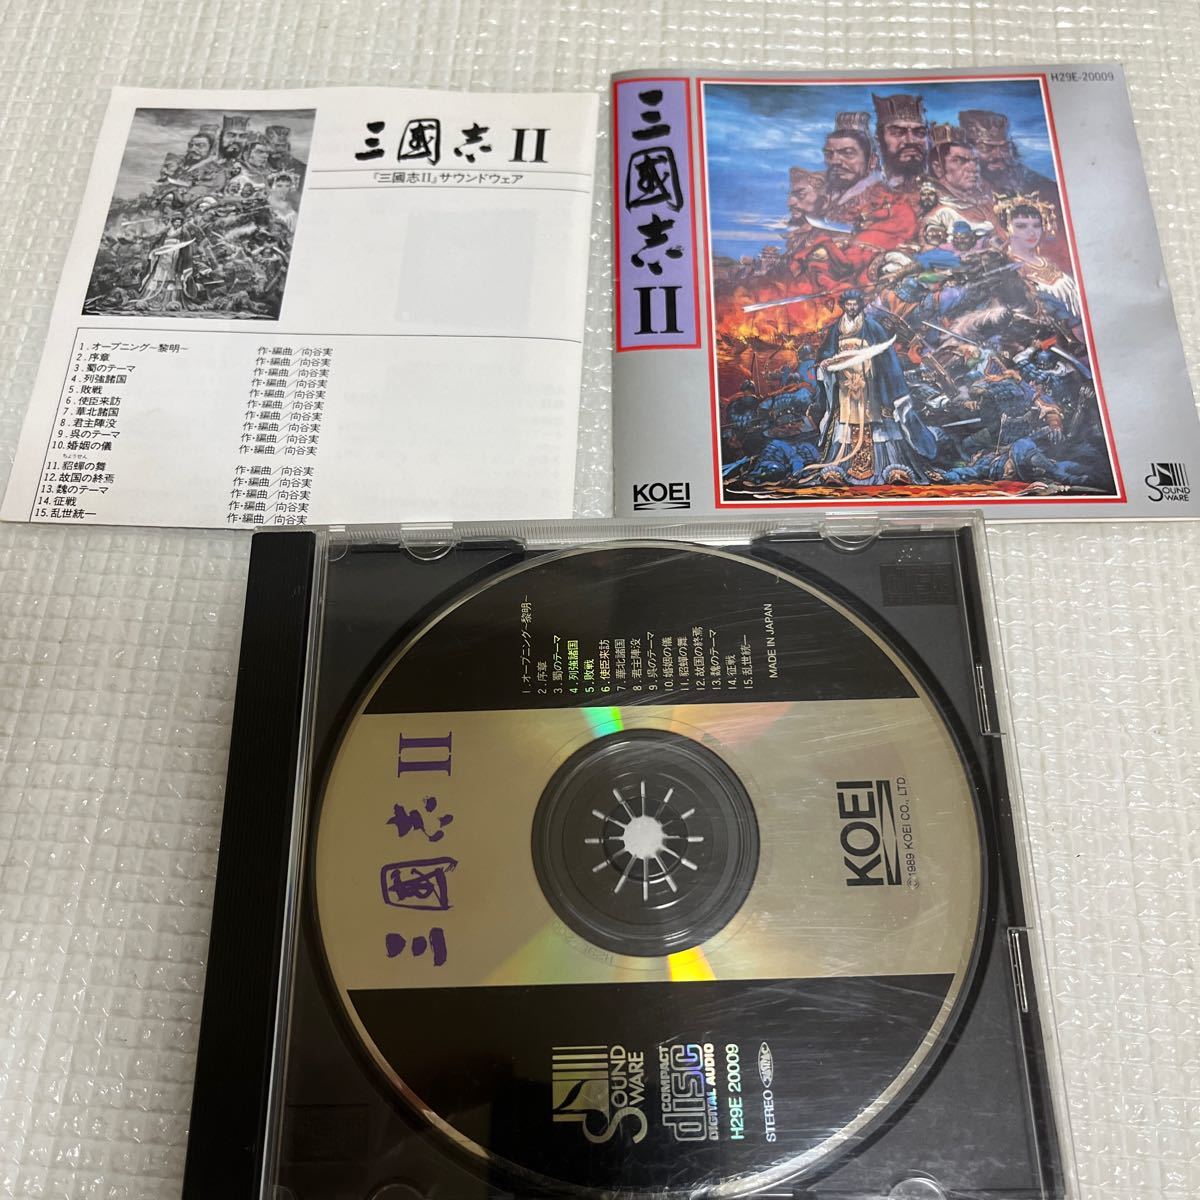 【CD】三國志Ⅱ 【H29E-20009】向谷実 ゲームミュージック サントラ KOEI_画像1